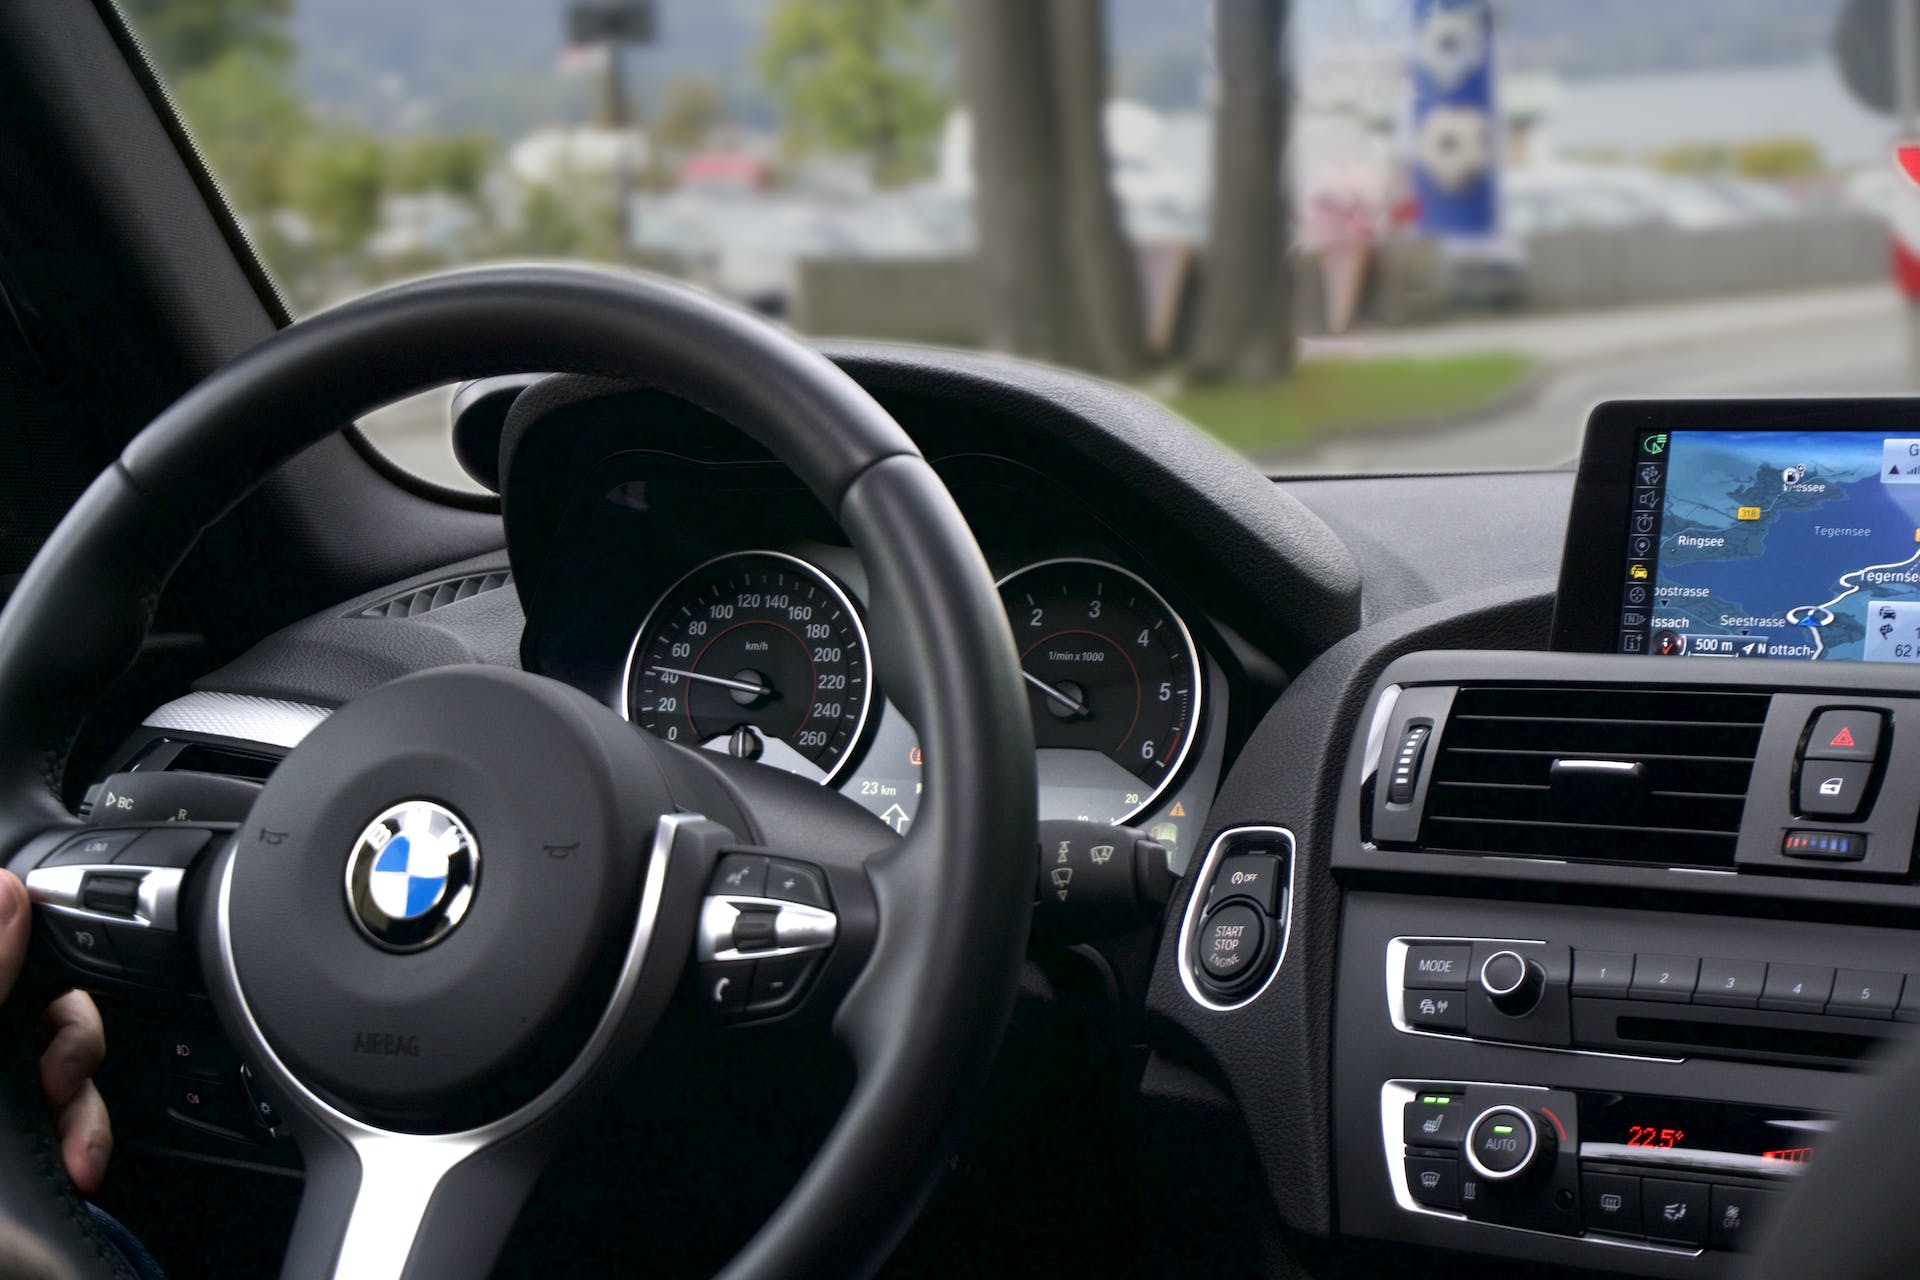 Steering wheel with hand. | Source: Pexels